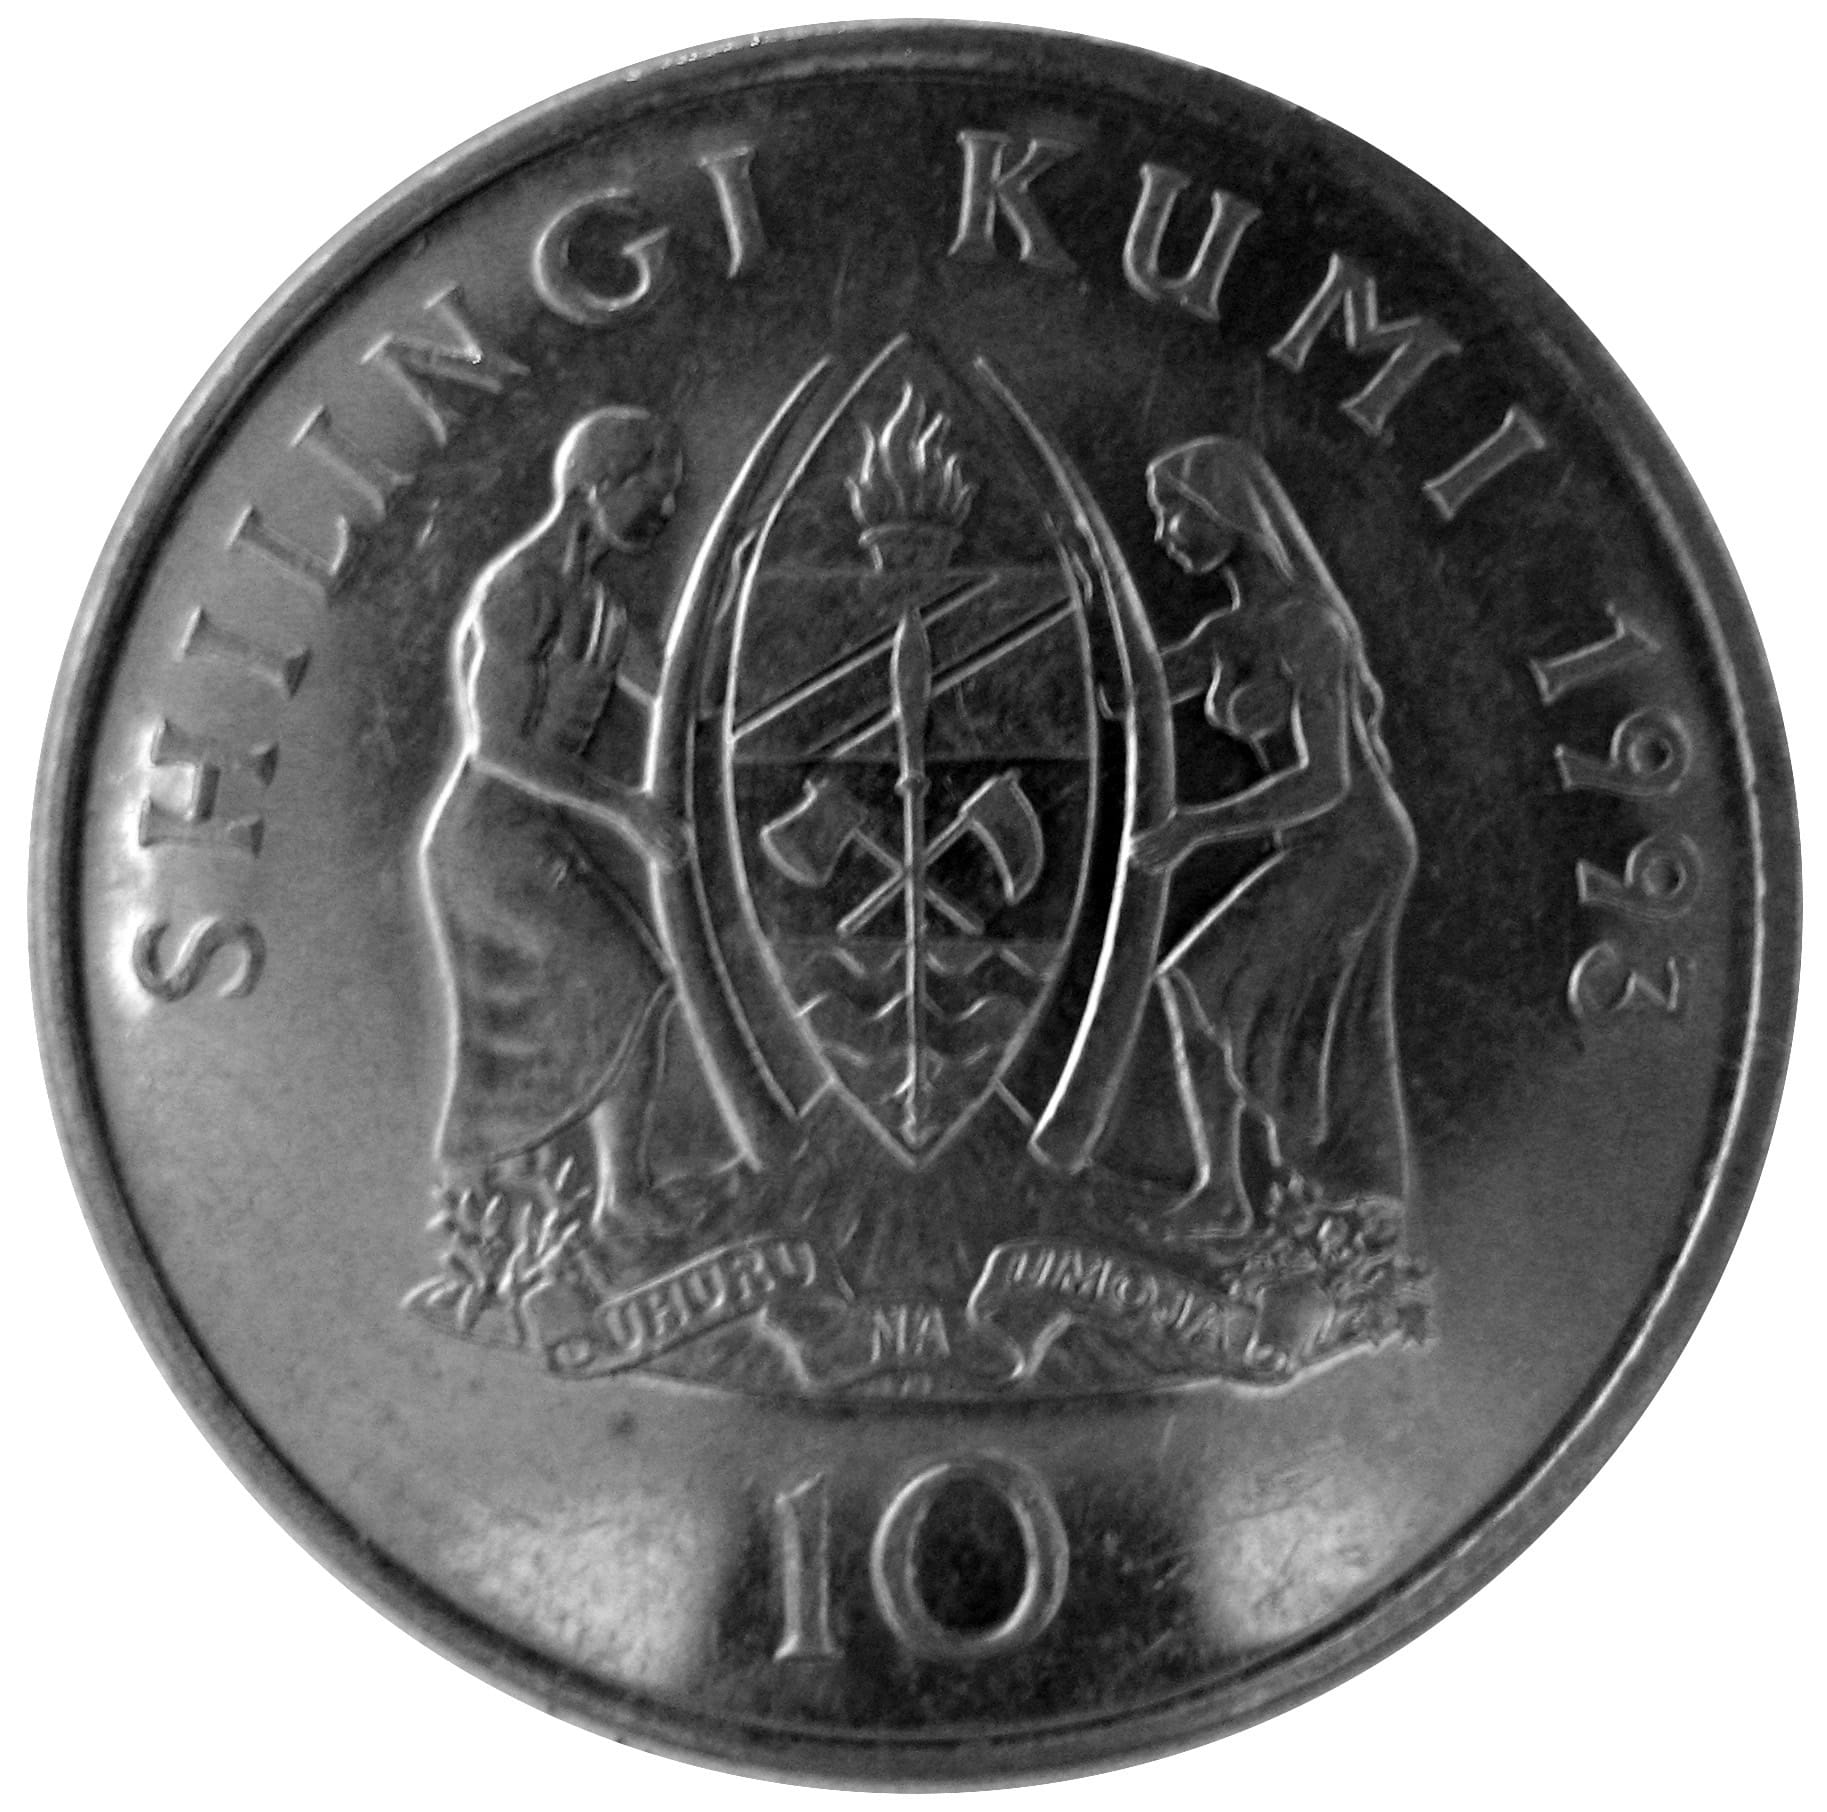 Tanzania 10 shilling coin